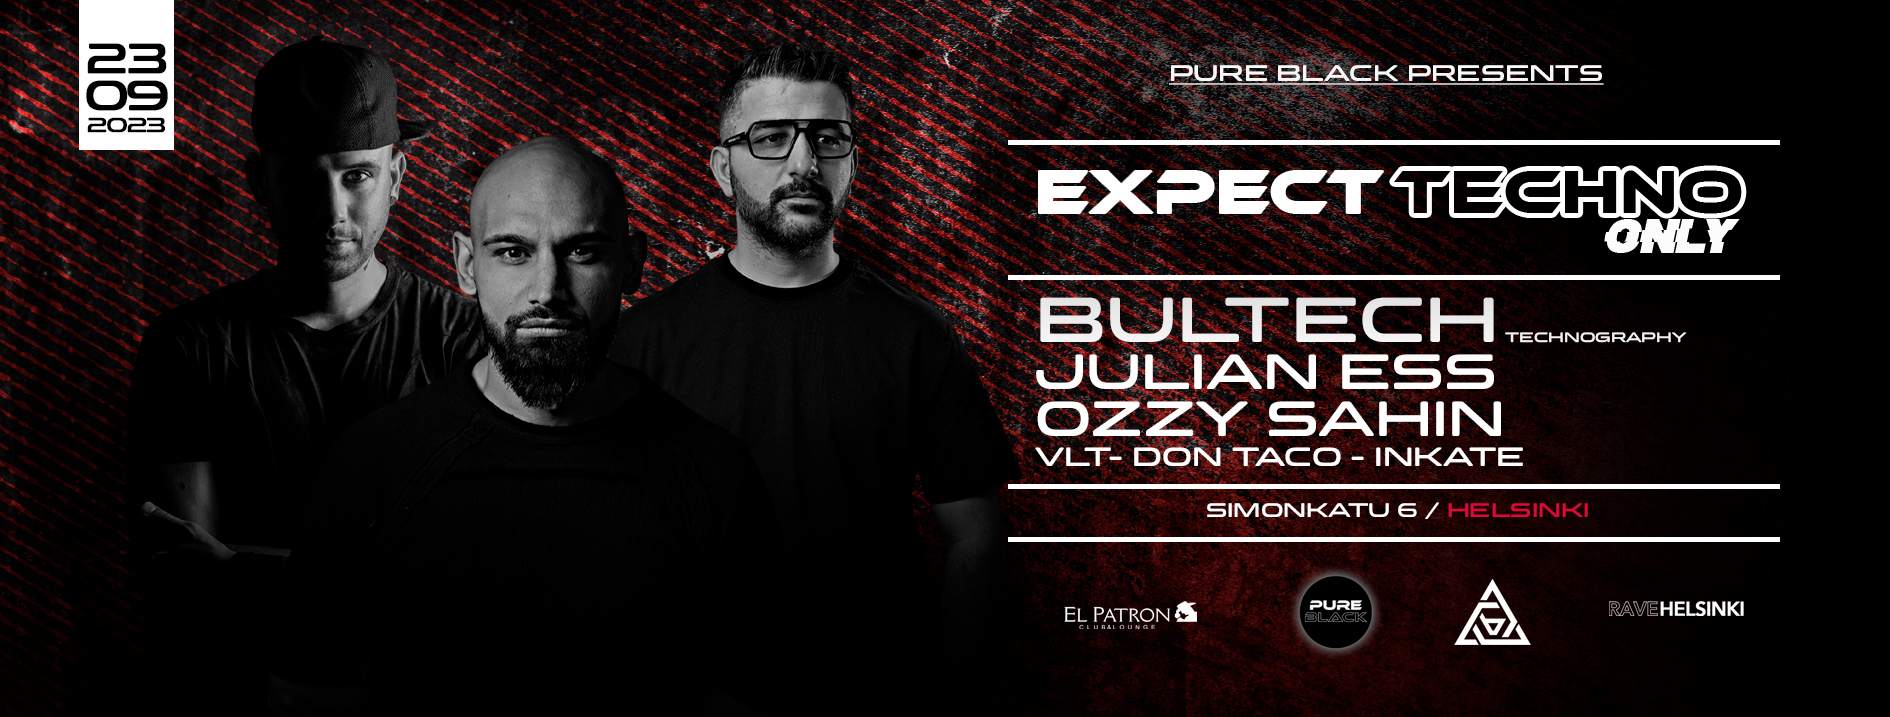 Expect Techno Only// Bultech, Julian Ess, Ozzy Sahin - フライヤー表